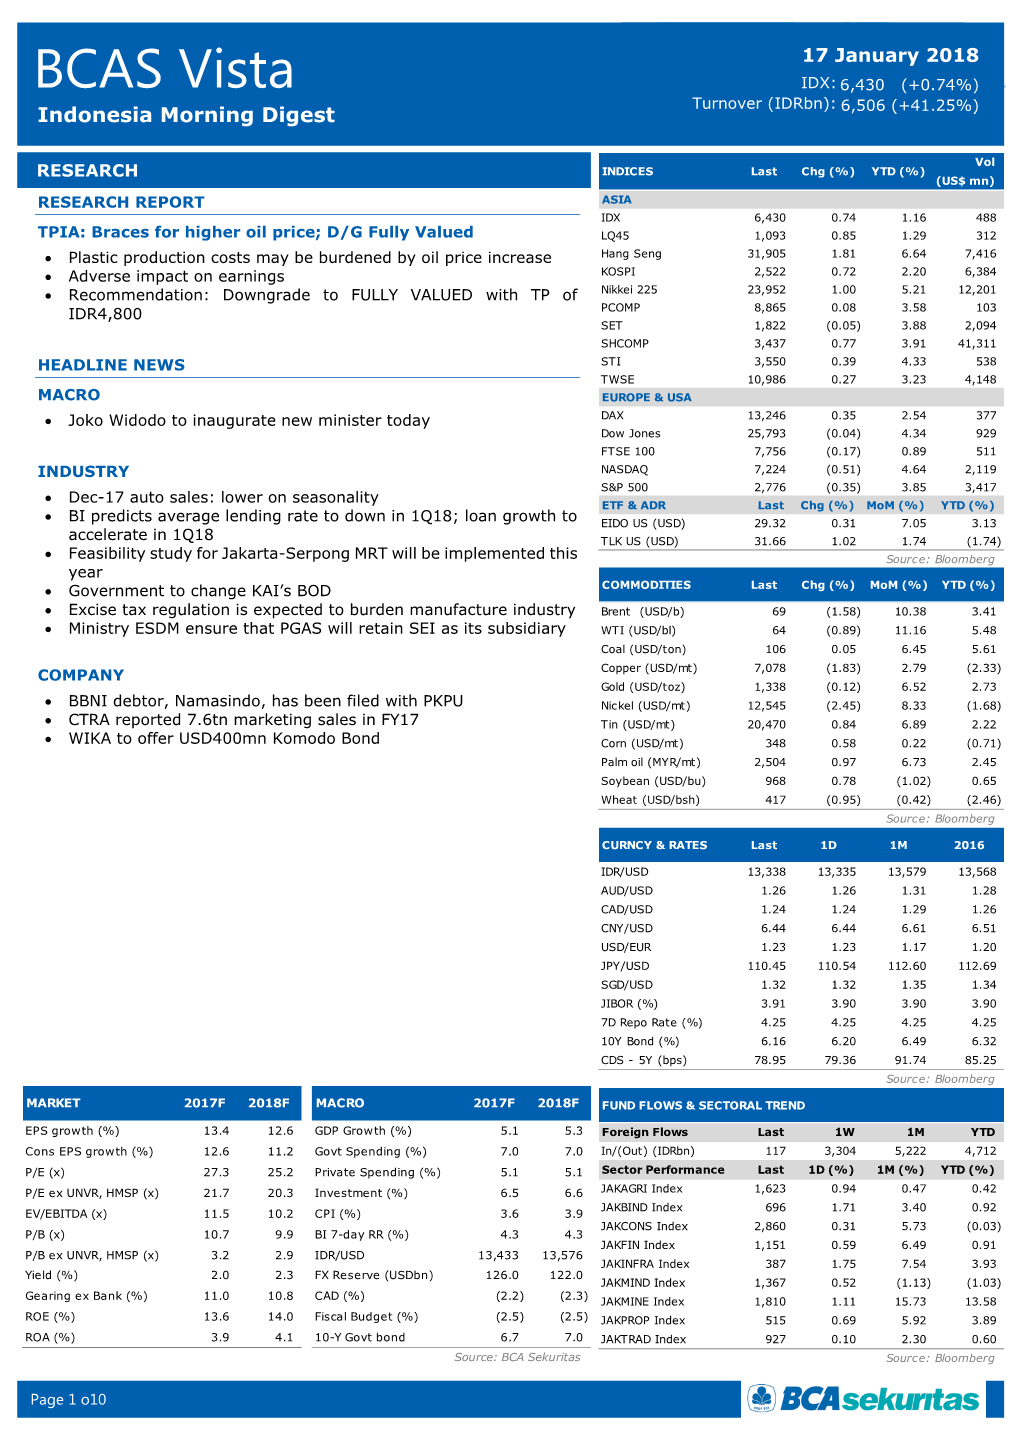 BCAS Vista IDX: 6,430 (+0.74%) Turnover (Idrbn): Indonesia Morning Digest 6,506 (+41.25%)